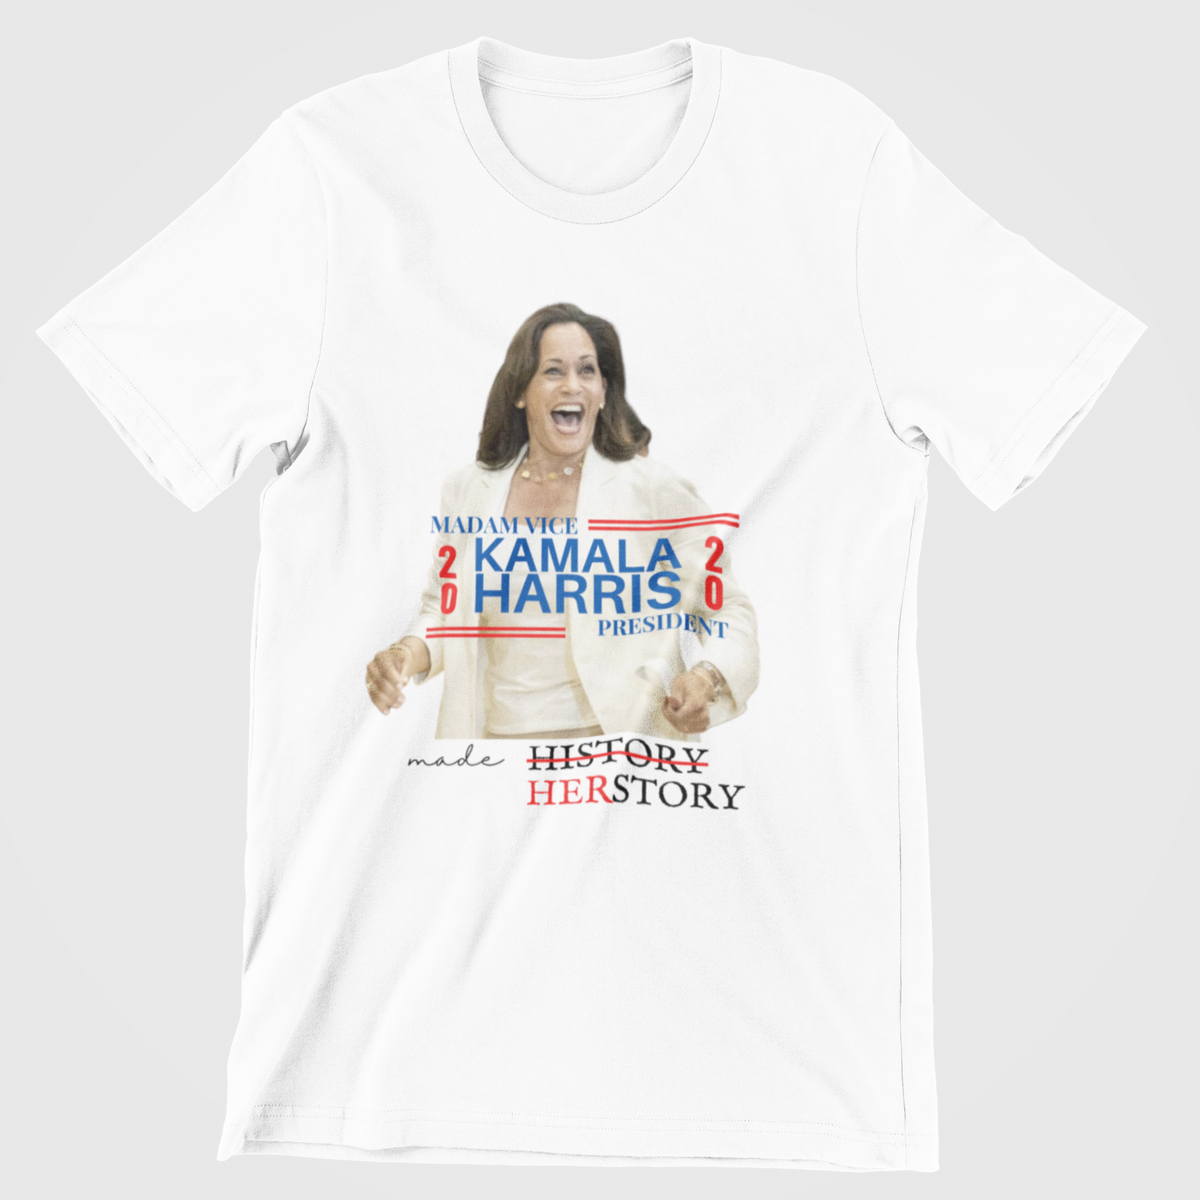 Madam Kamala Harris HERstory to – T-shirt HIStory changed SensibleTees